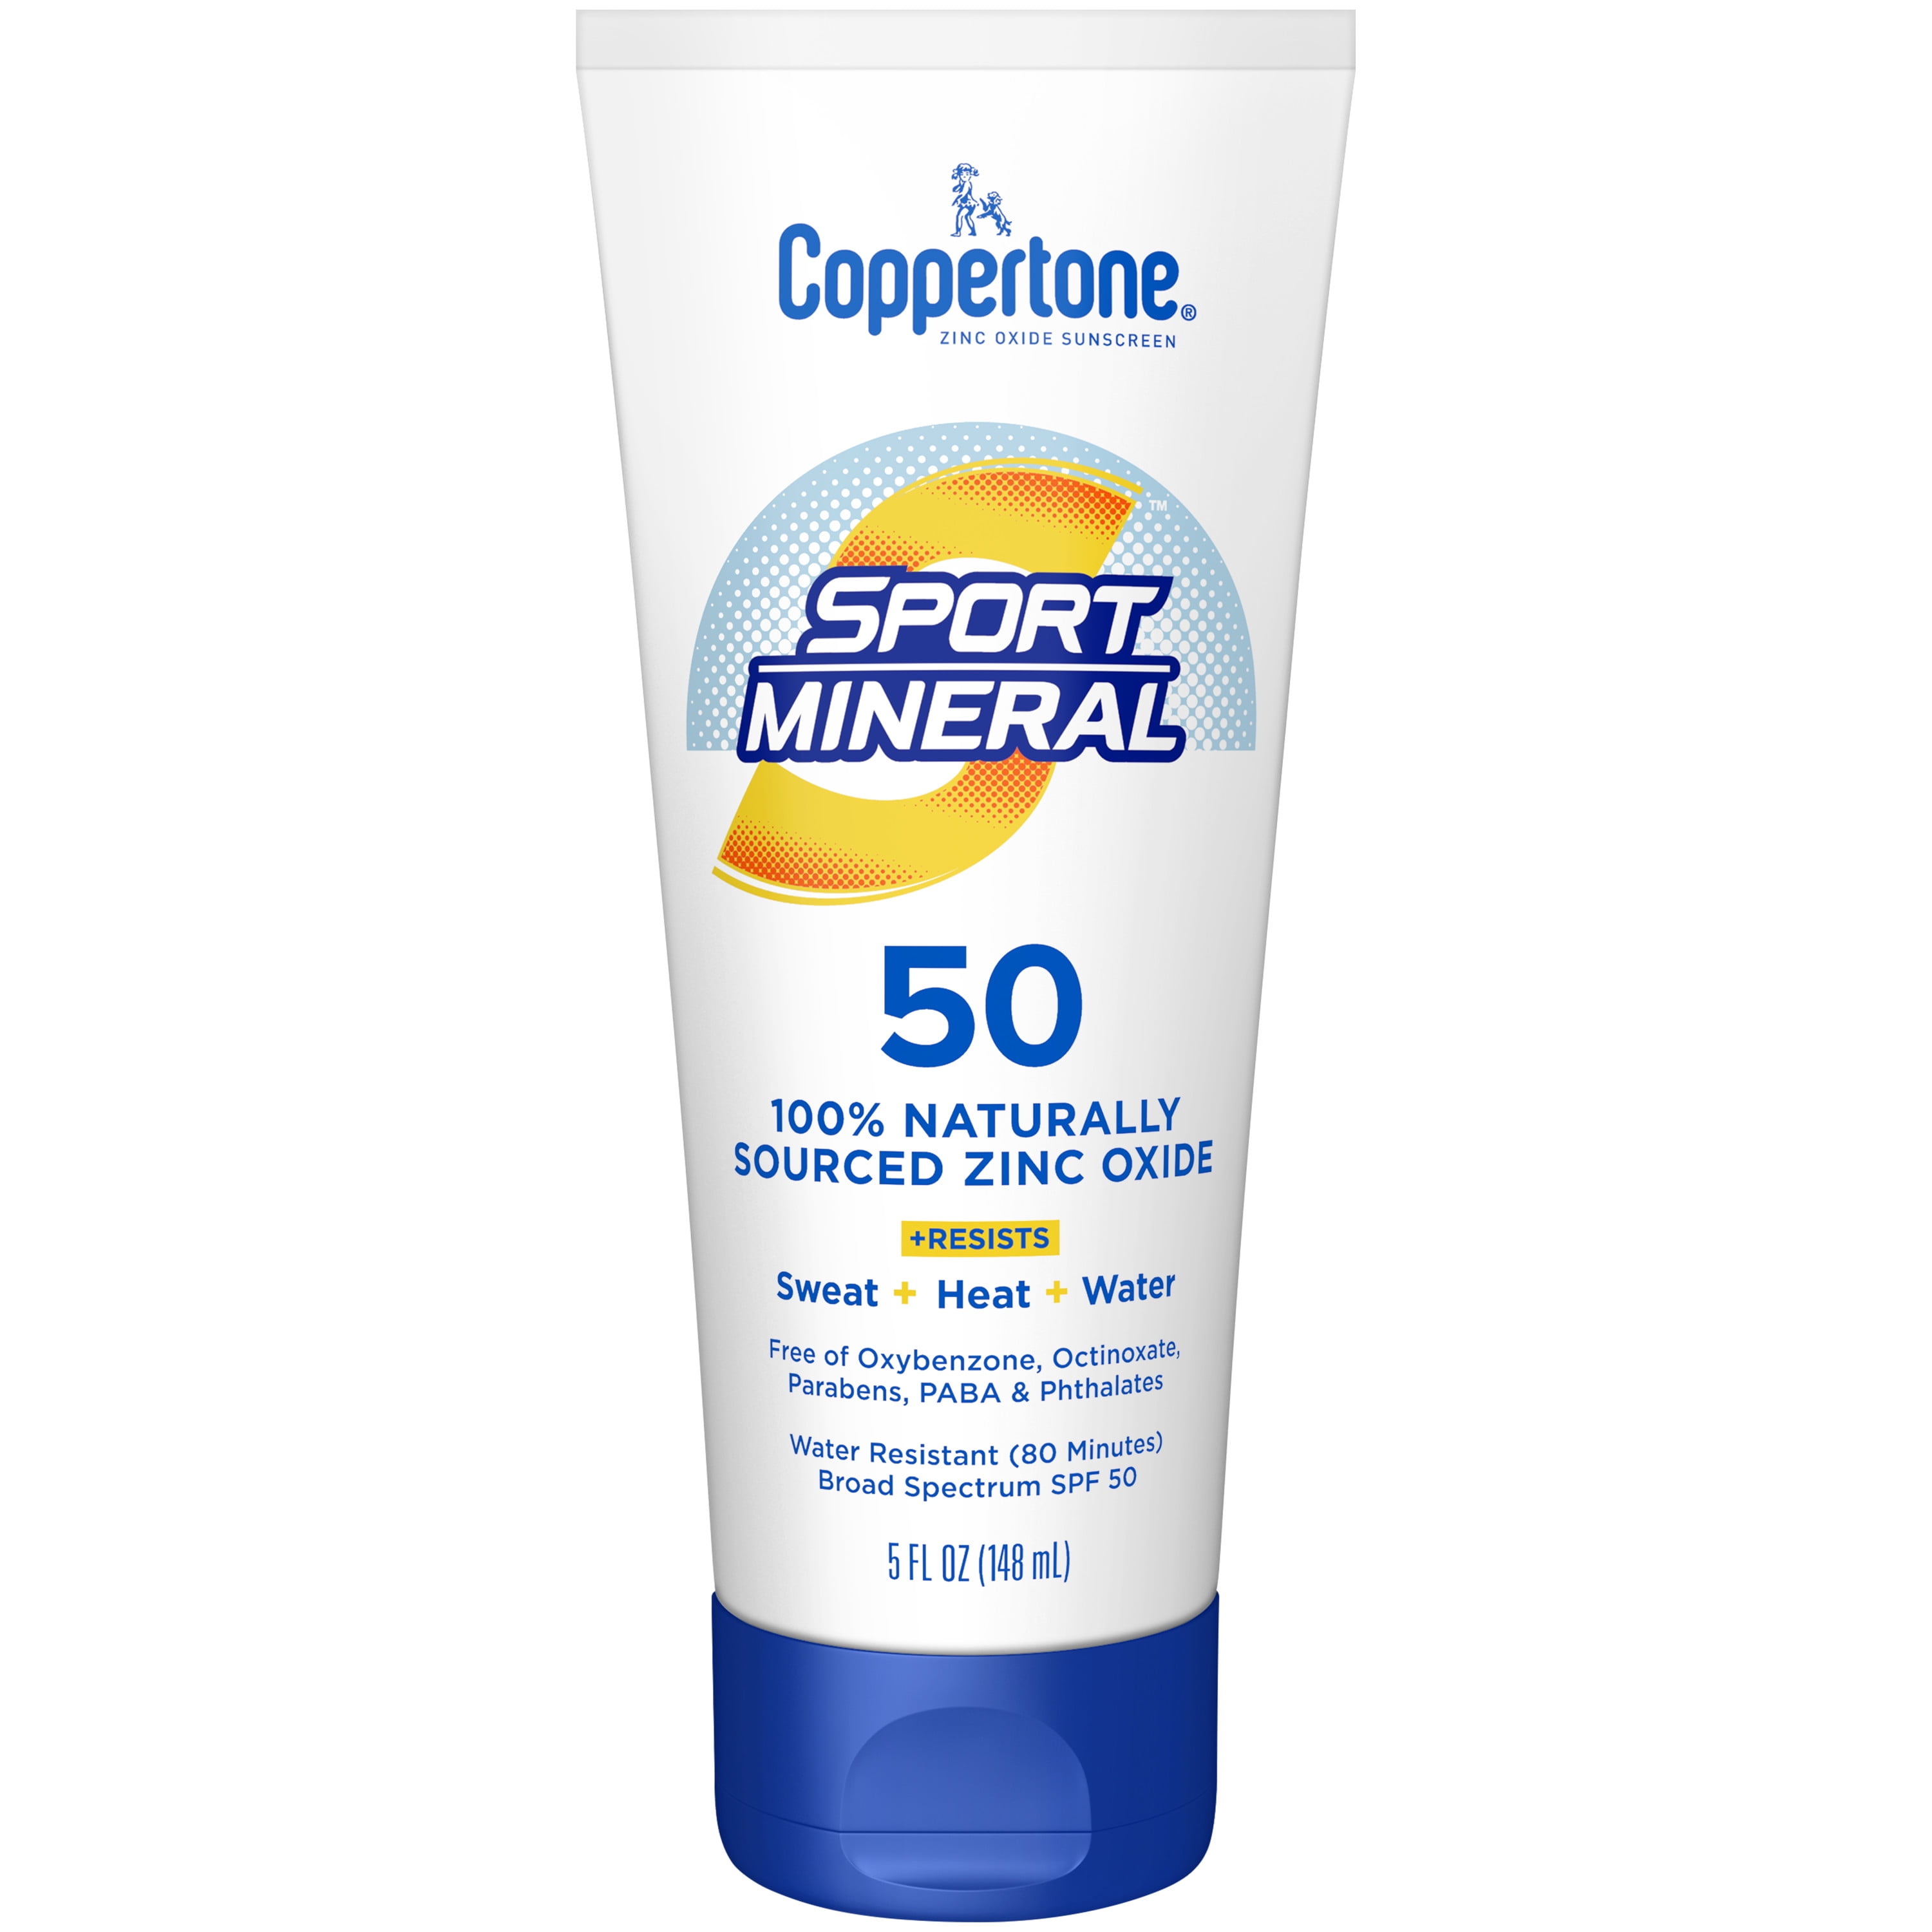 Coppertone Sport Mineral Sunscreen SPF 50 Lotion | Zinc Oxide | UVA UVB Protection |  5 fl. oz.